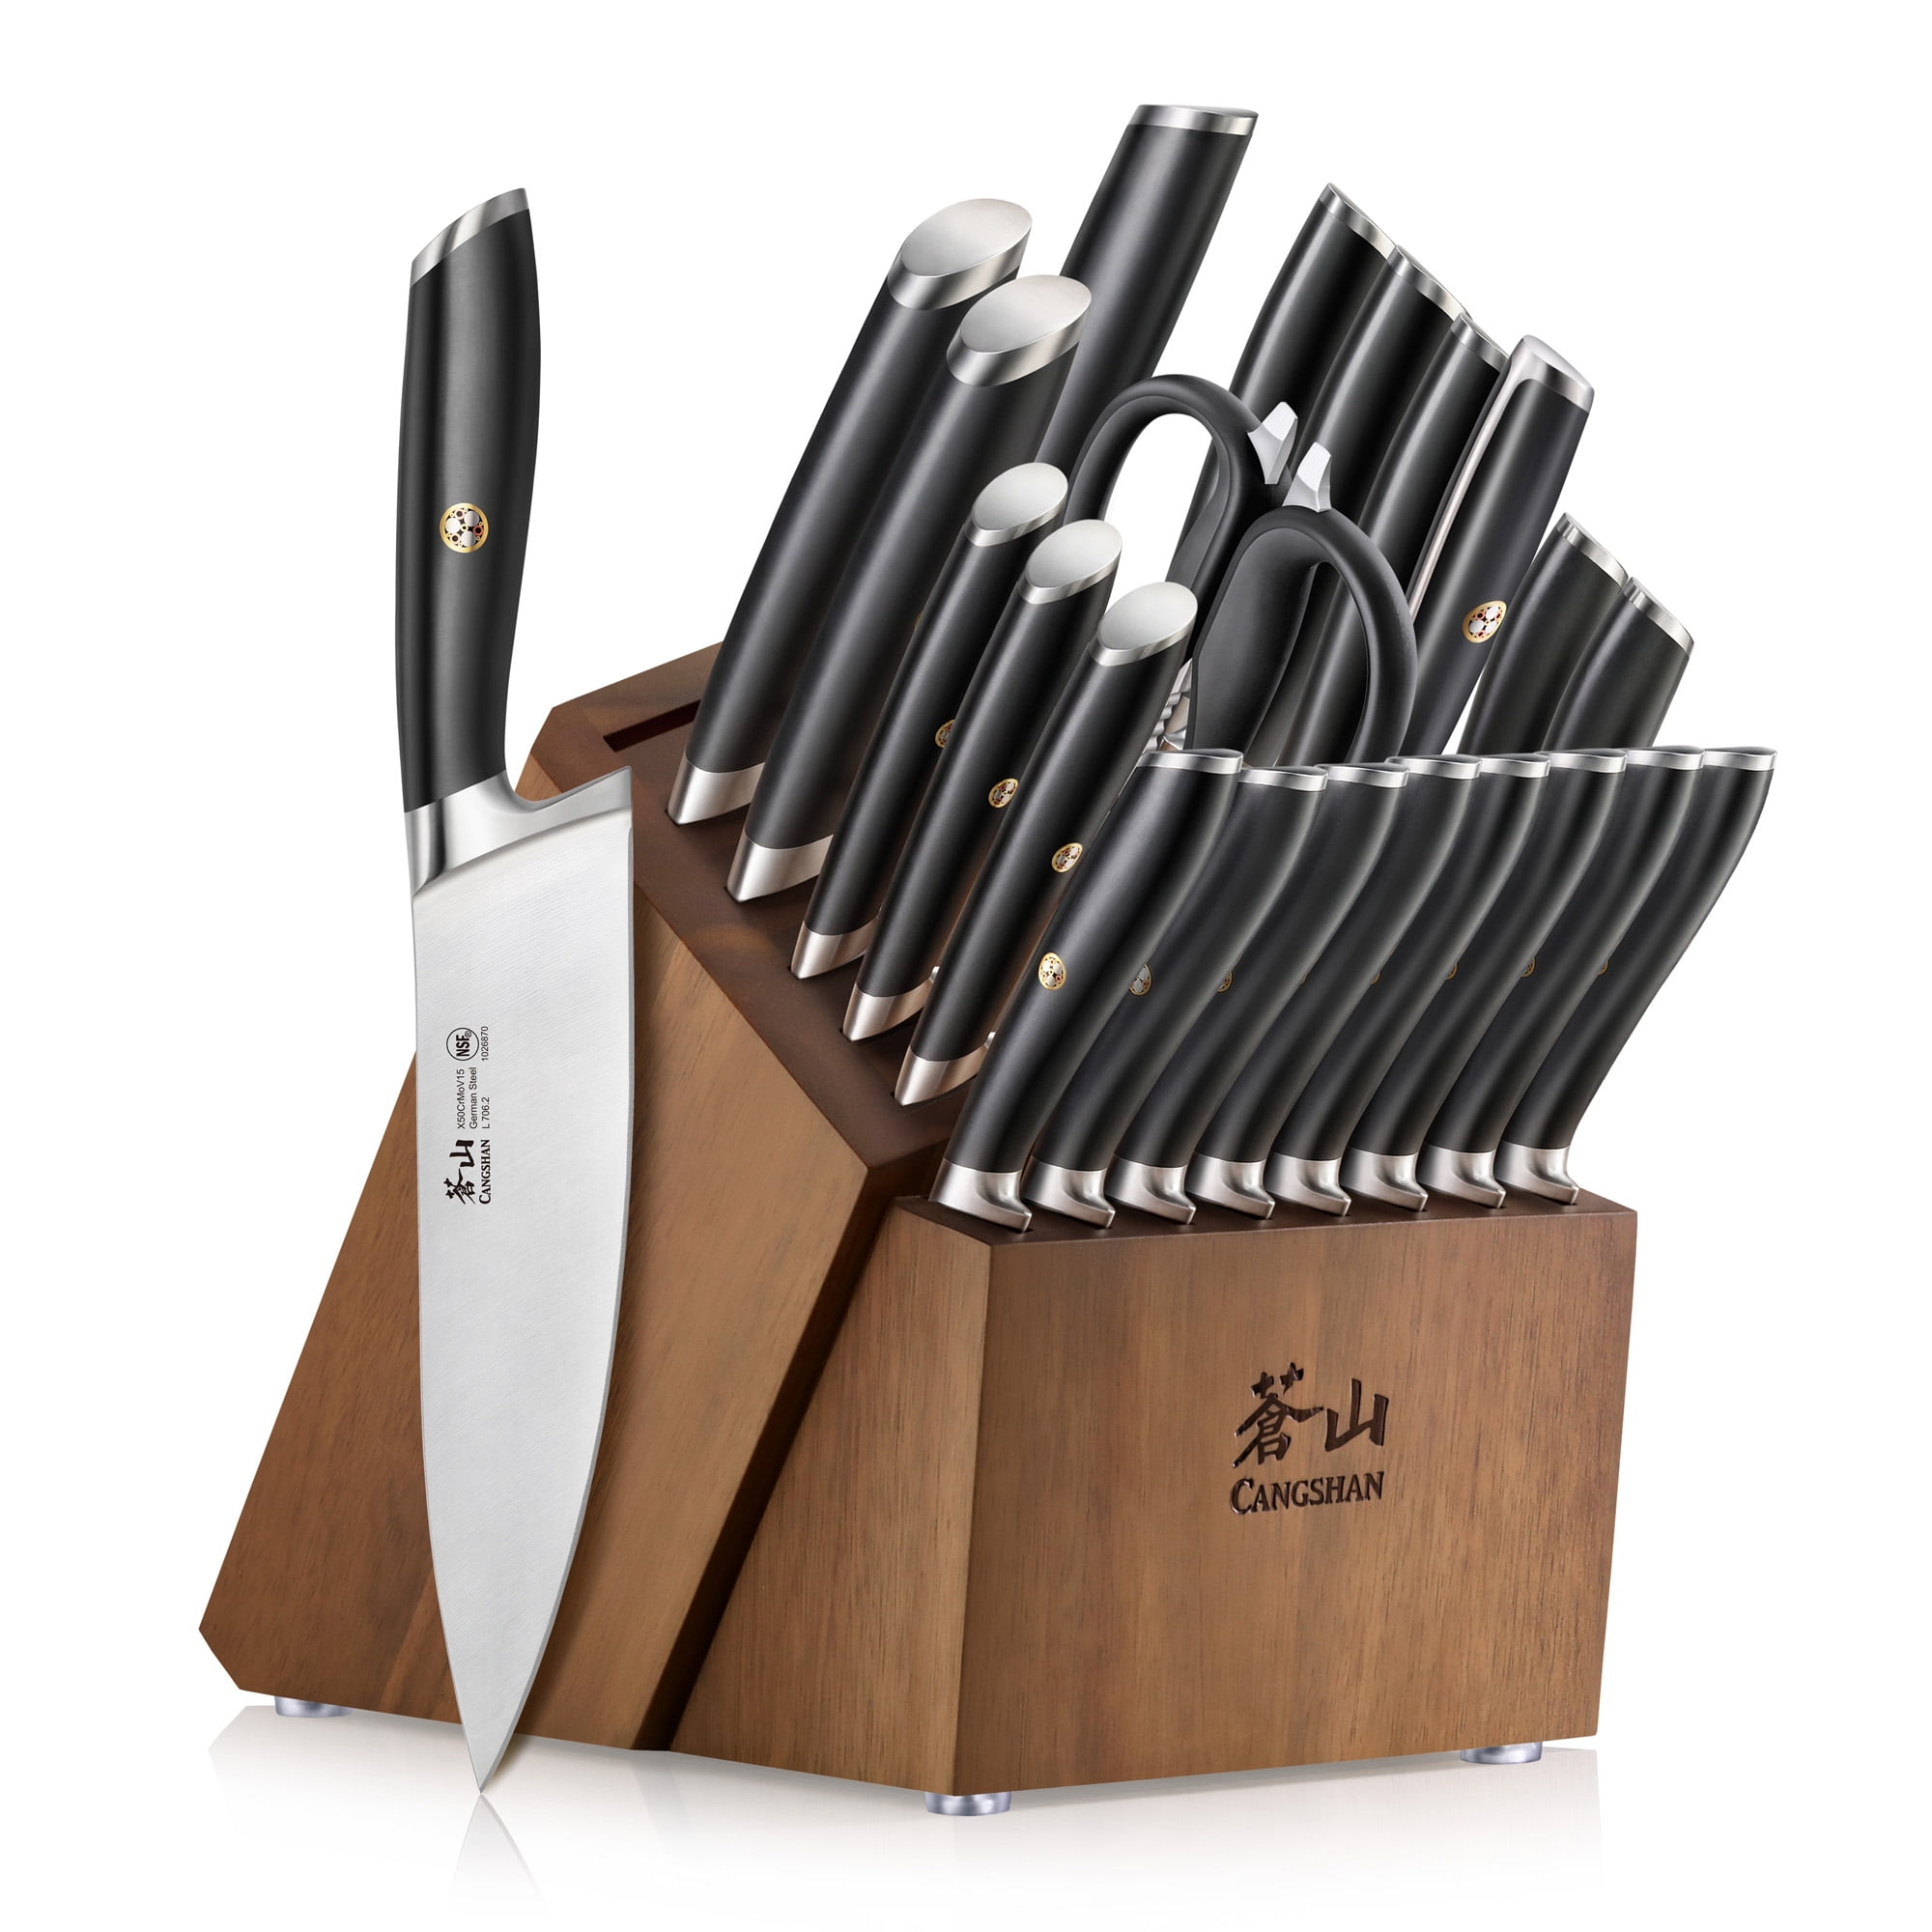 L Series 4-Piece Fine-Edge Steak Knife Set, Forged German Steel